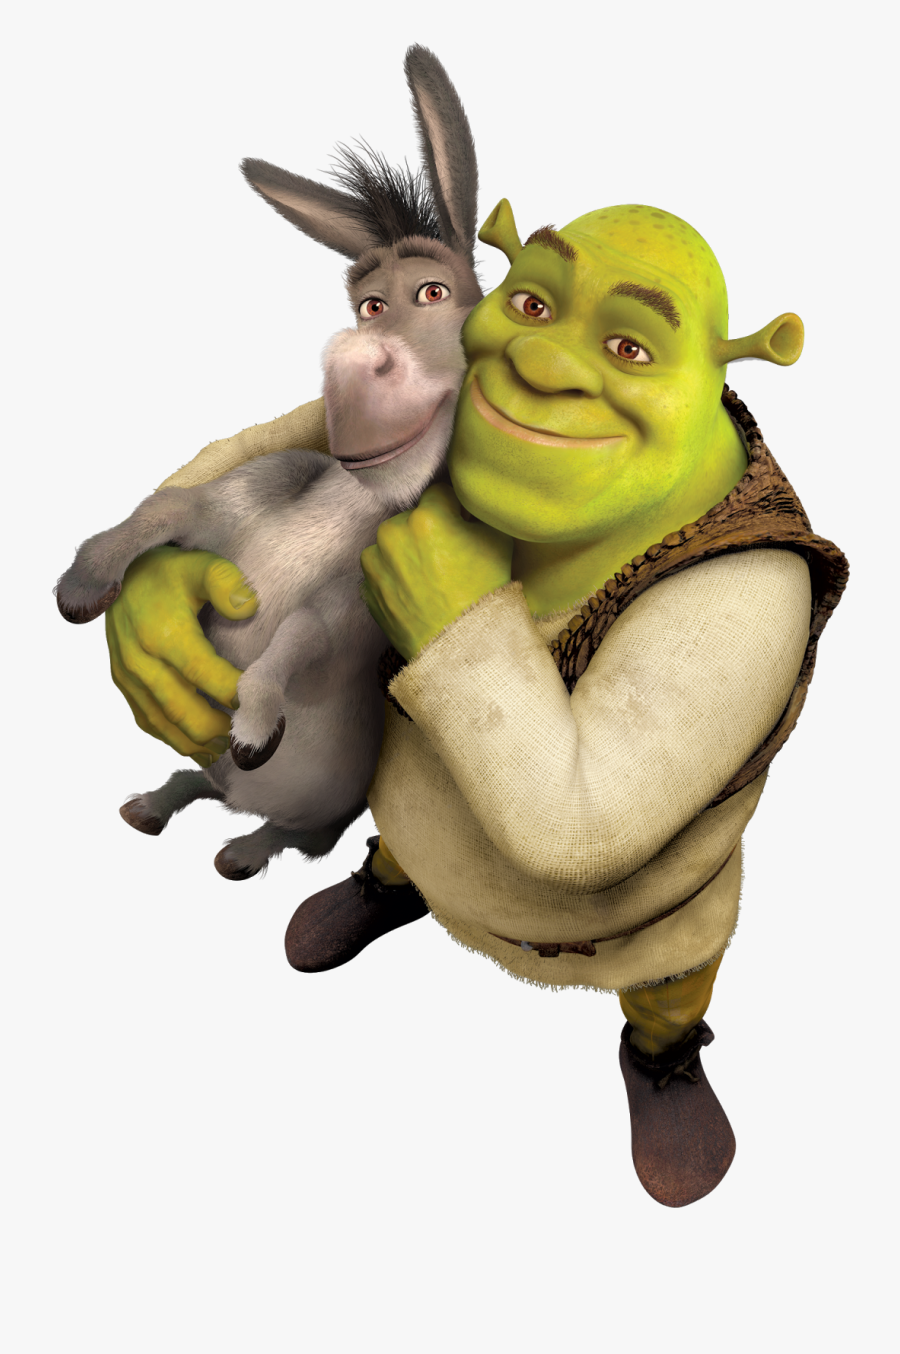 Shrek Donkey Png Image, Transparent Clipart